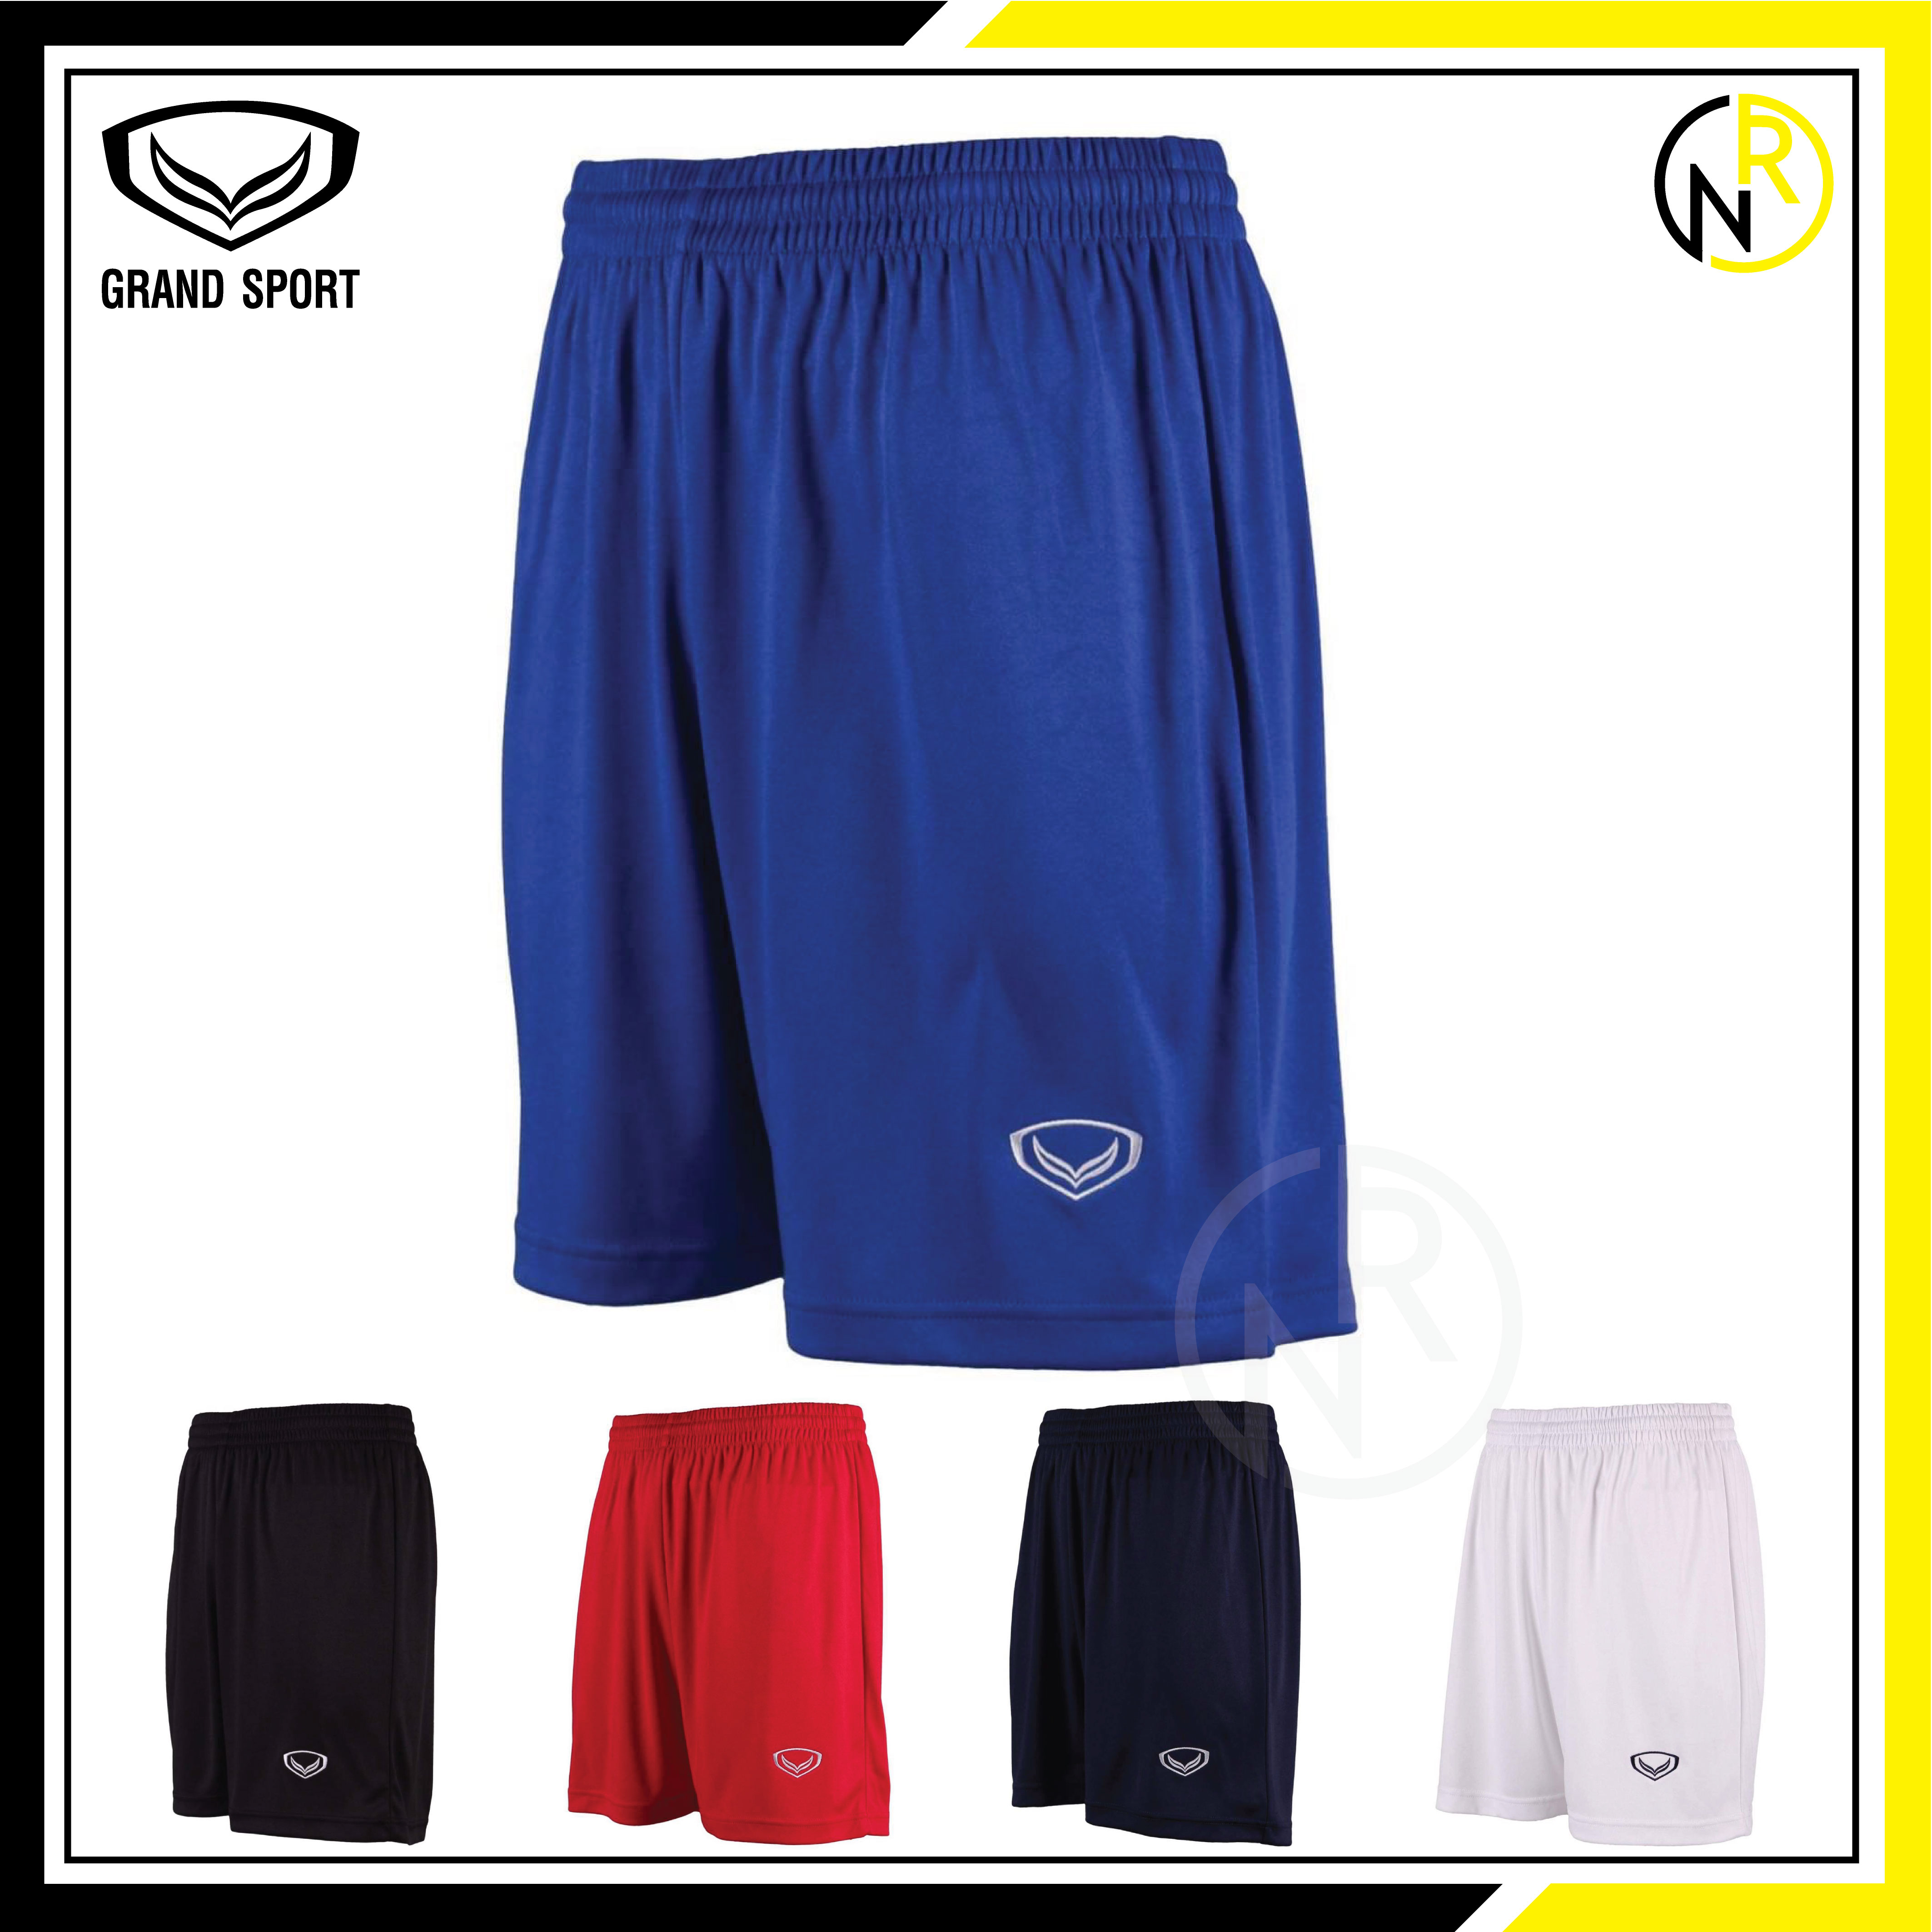 GRAND SPORT กางเกงฟุตบอลแกรนด์สปอร์ต 01-520 ของแท้100% กางเกงกีฬาตรงเอวมีเชือกผูก